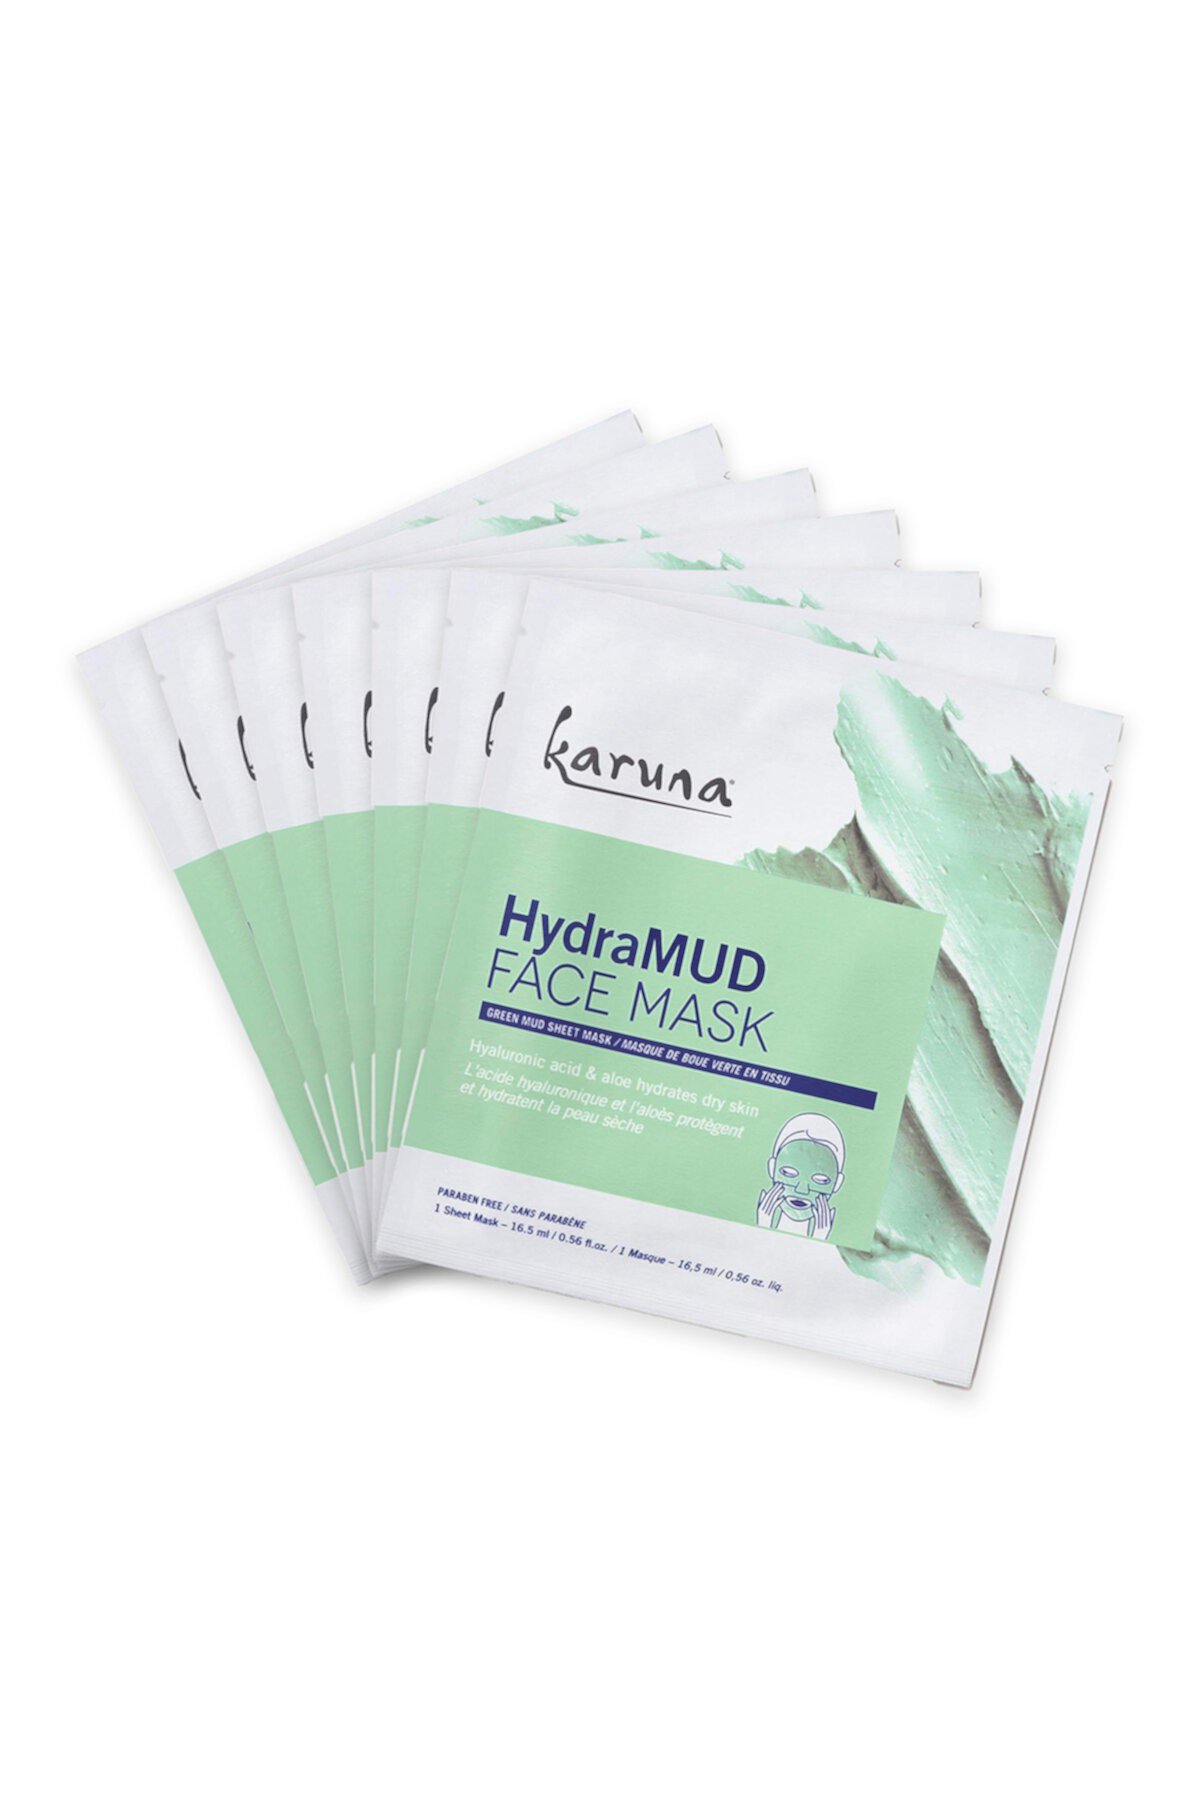 HydraMUD Face Mask - Pack of 7 Karuna